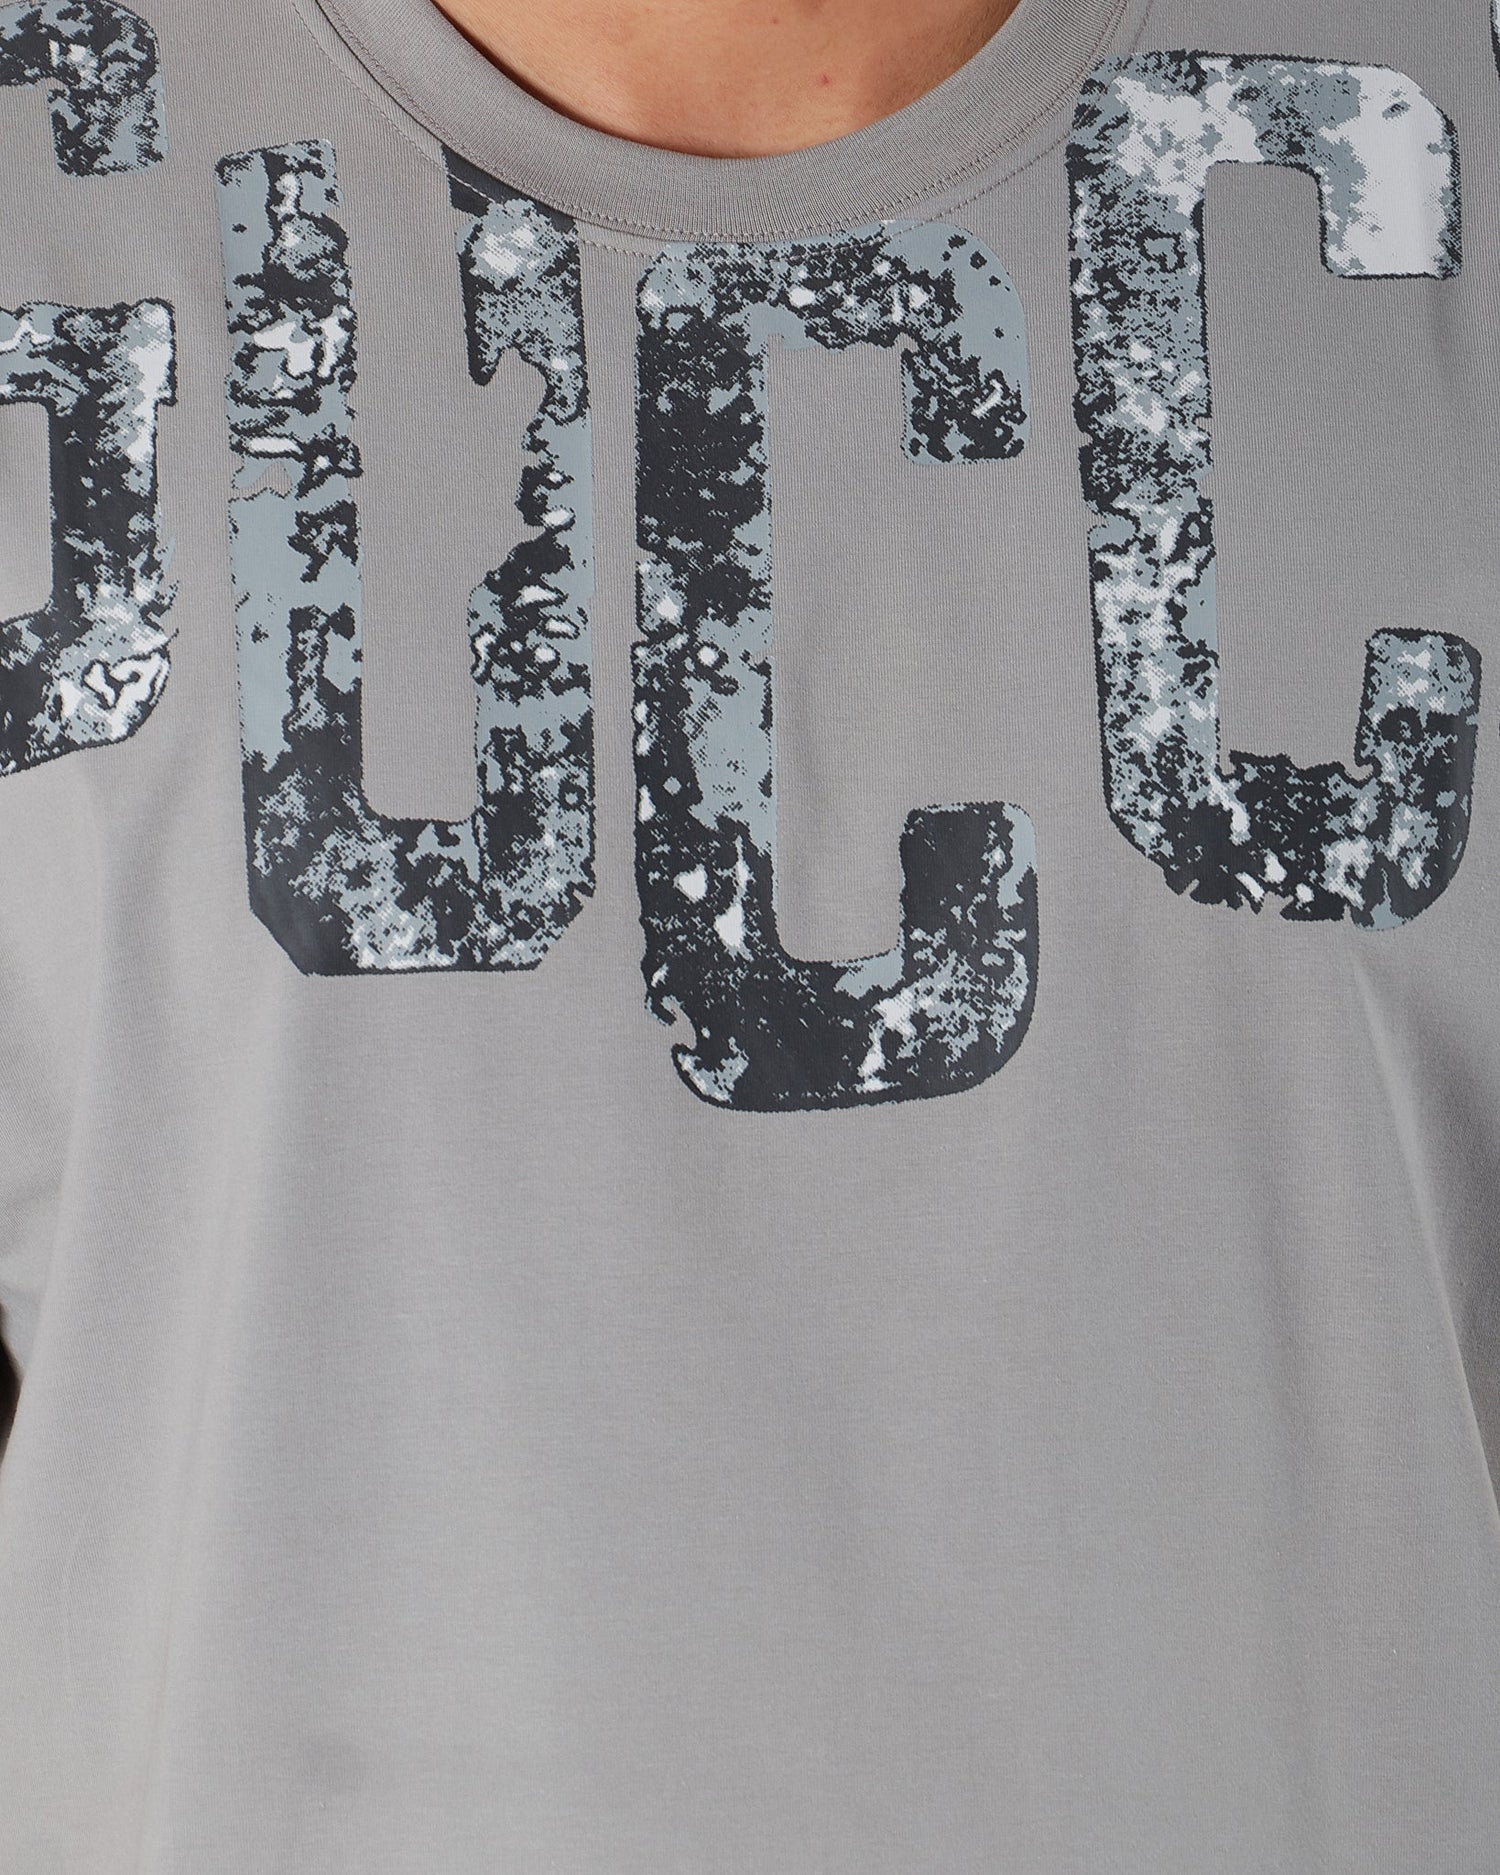 MOI OUTFIT-Gucci Logo Printed Men T-Shirt 15.90